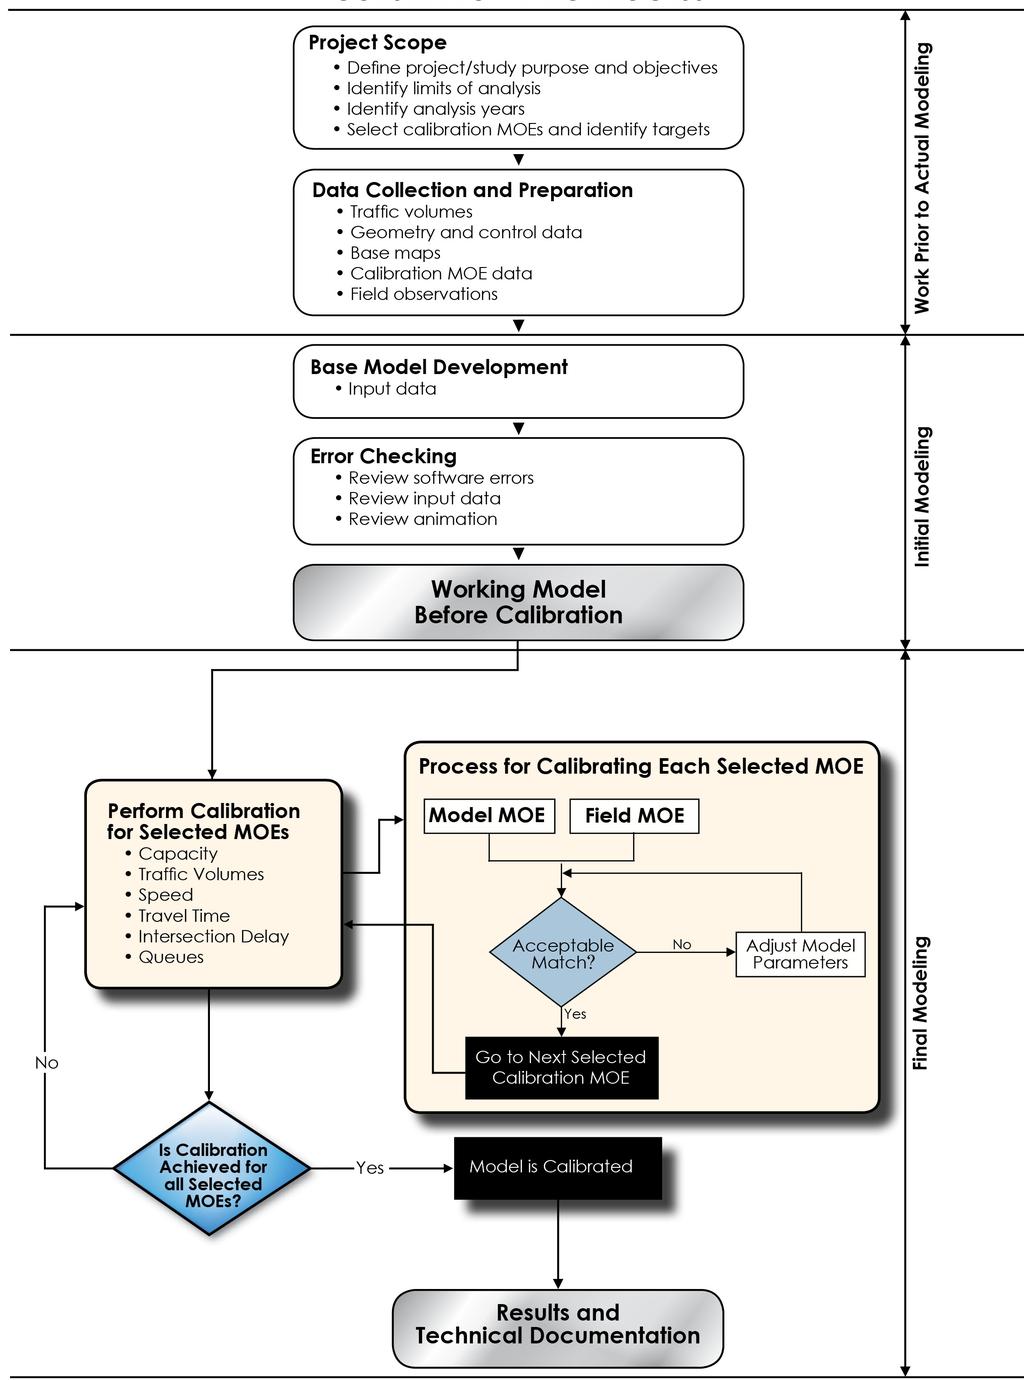 \ Figure 1: CORSIM Modeling Process Flowchart